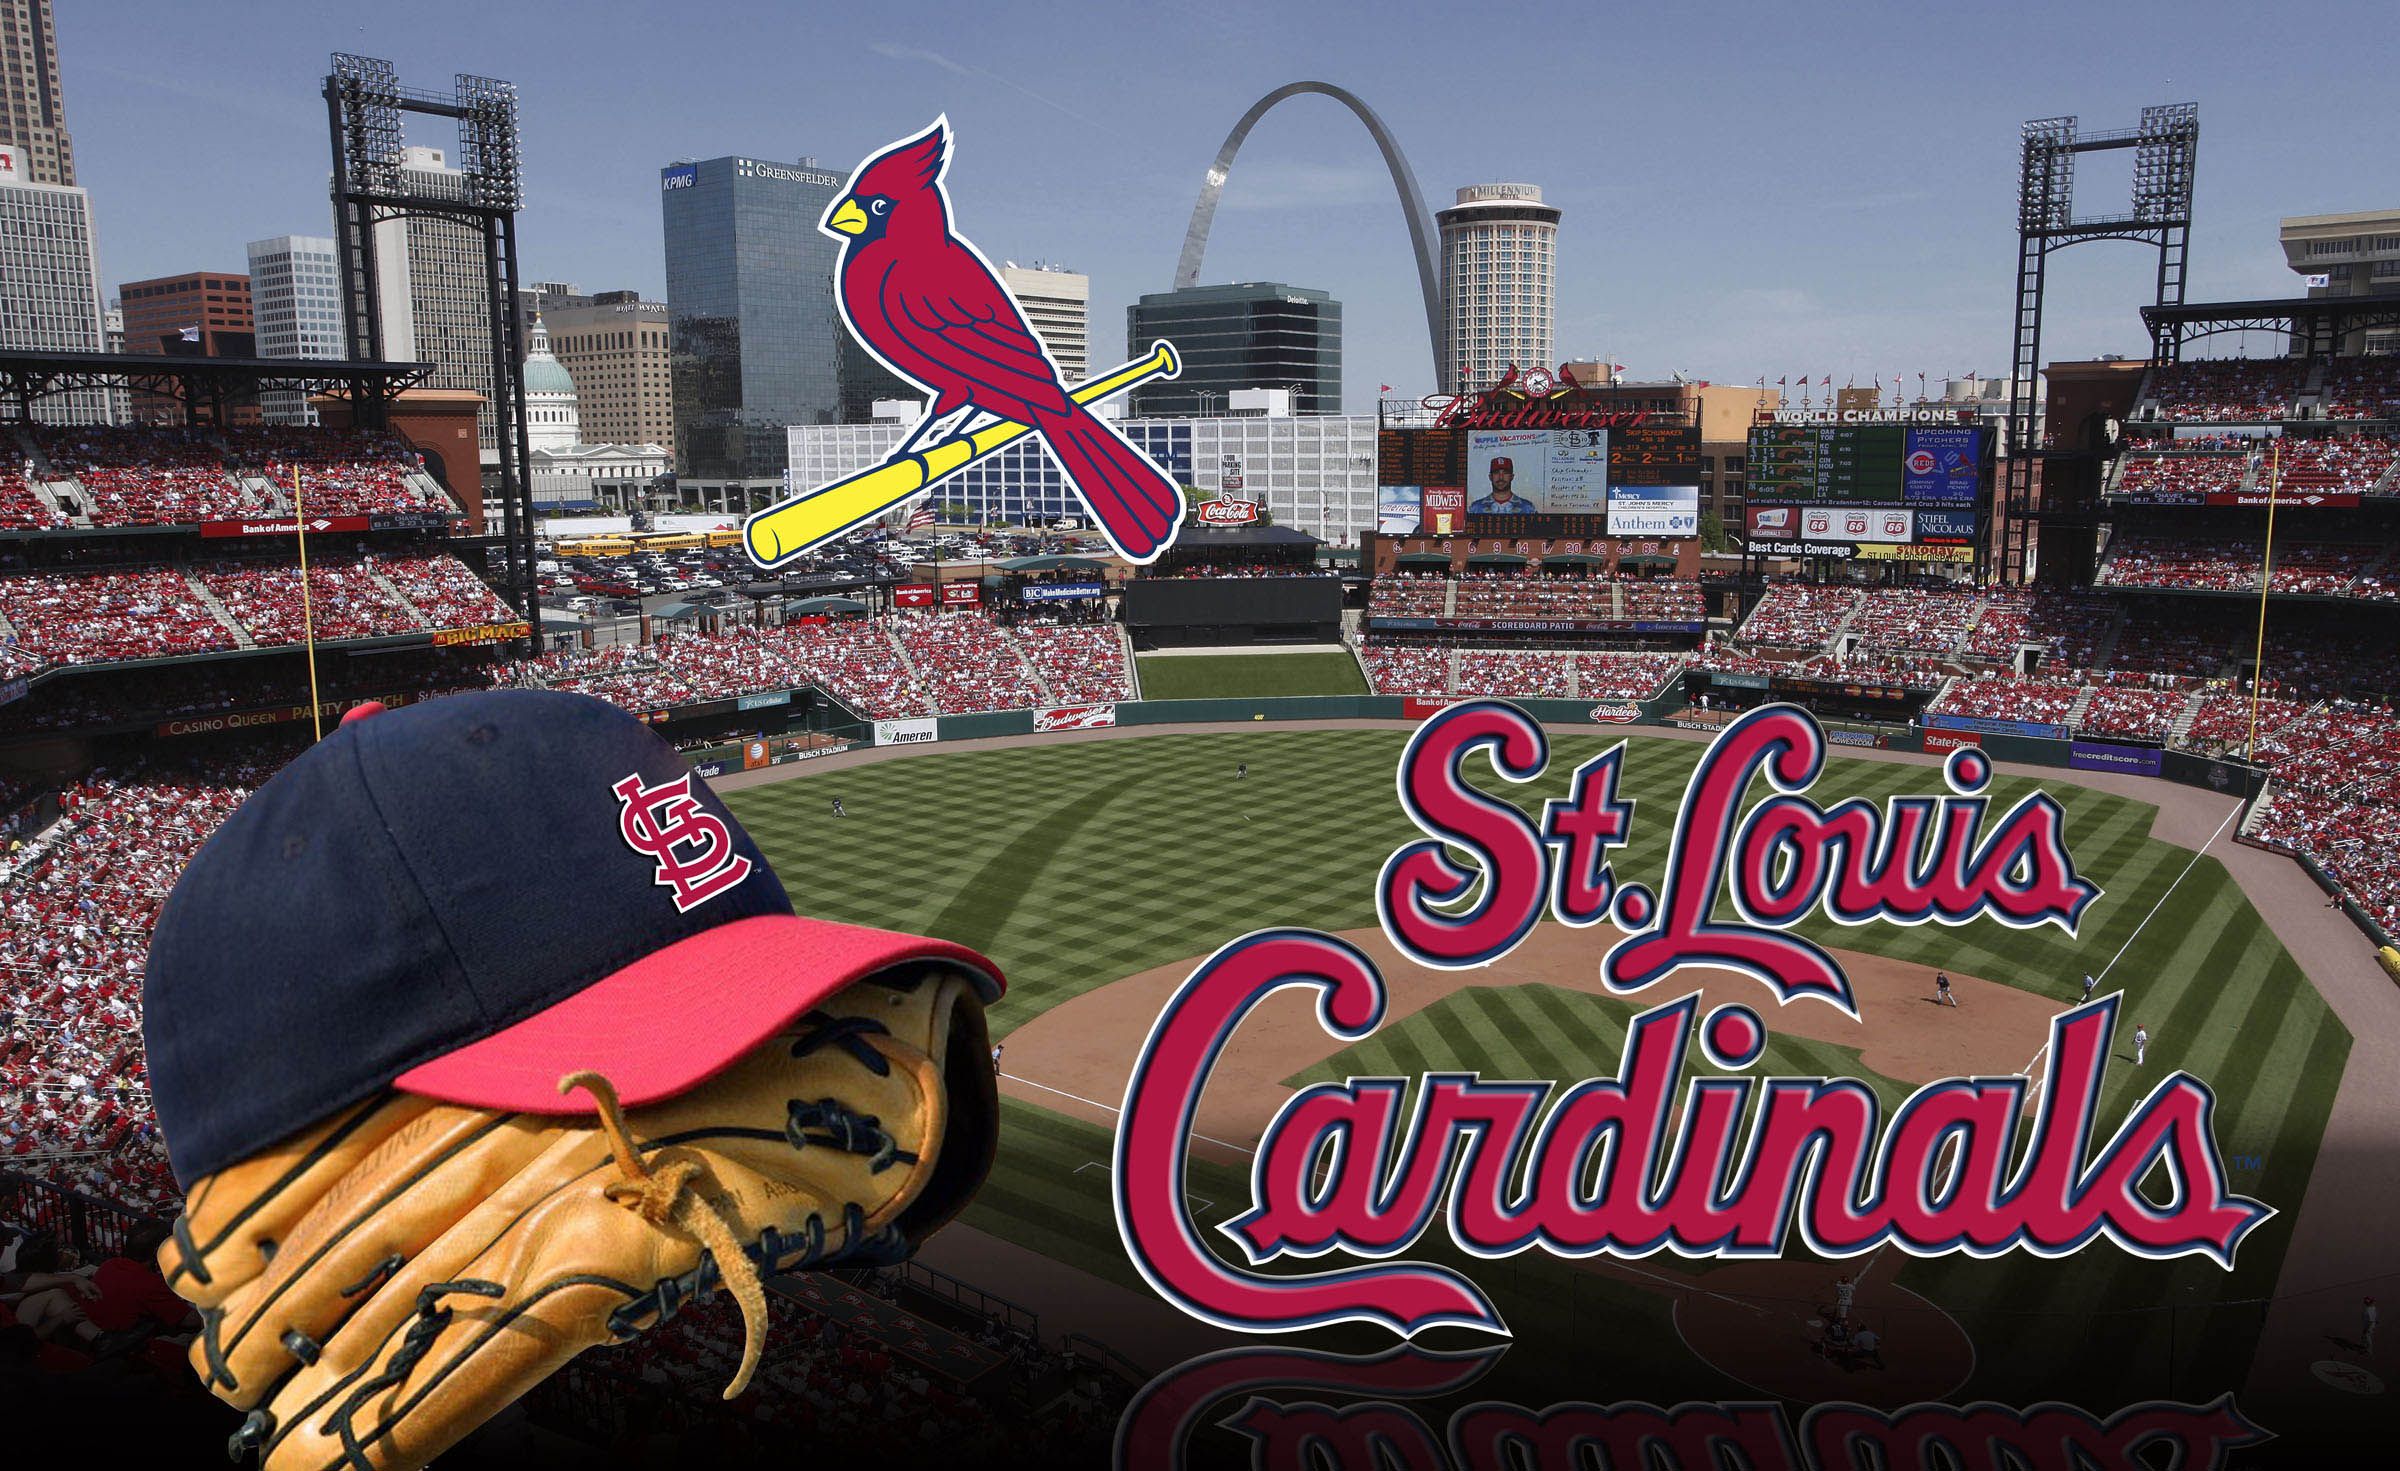 MLB St. Louis Cardinals wallpaper HD. Free desktop background 2016